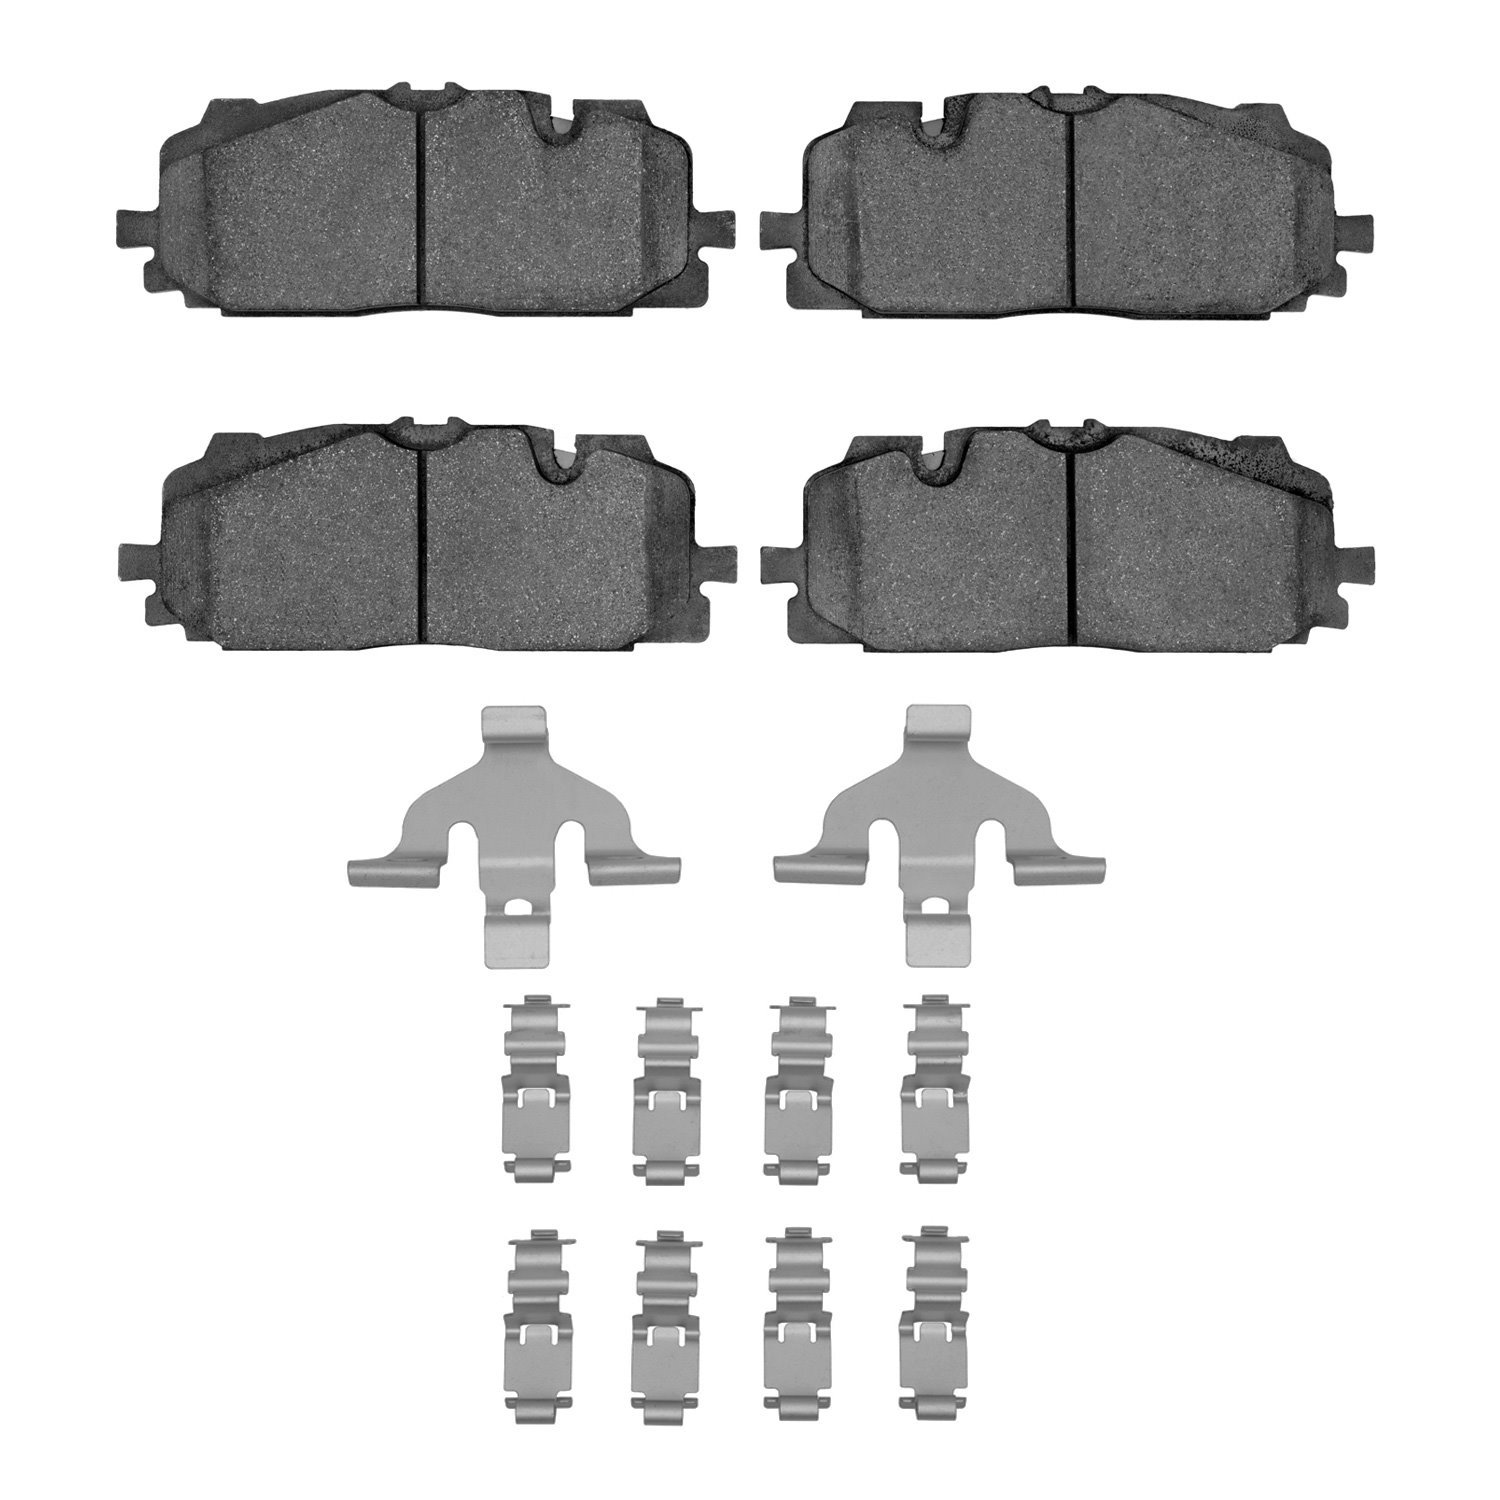 1600-1894-01 5000 Euro Ceramic Brake Pads & Hardware Kit, Fits Select Audi/Volkswagen, Position: Front